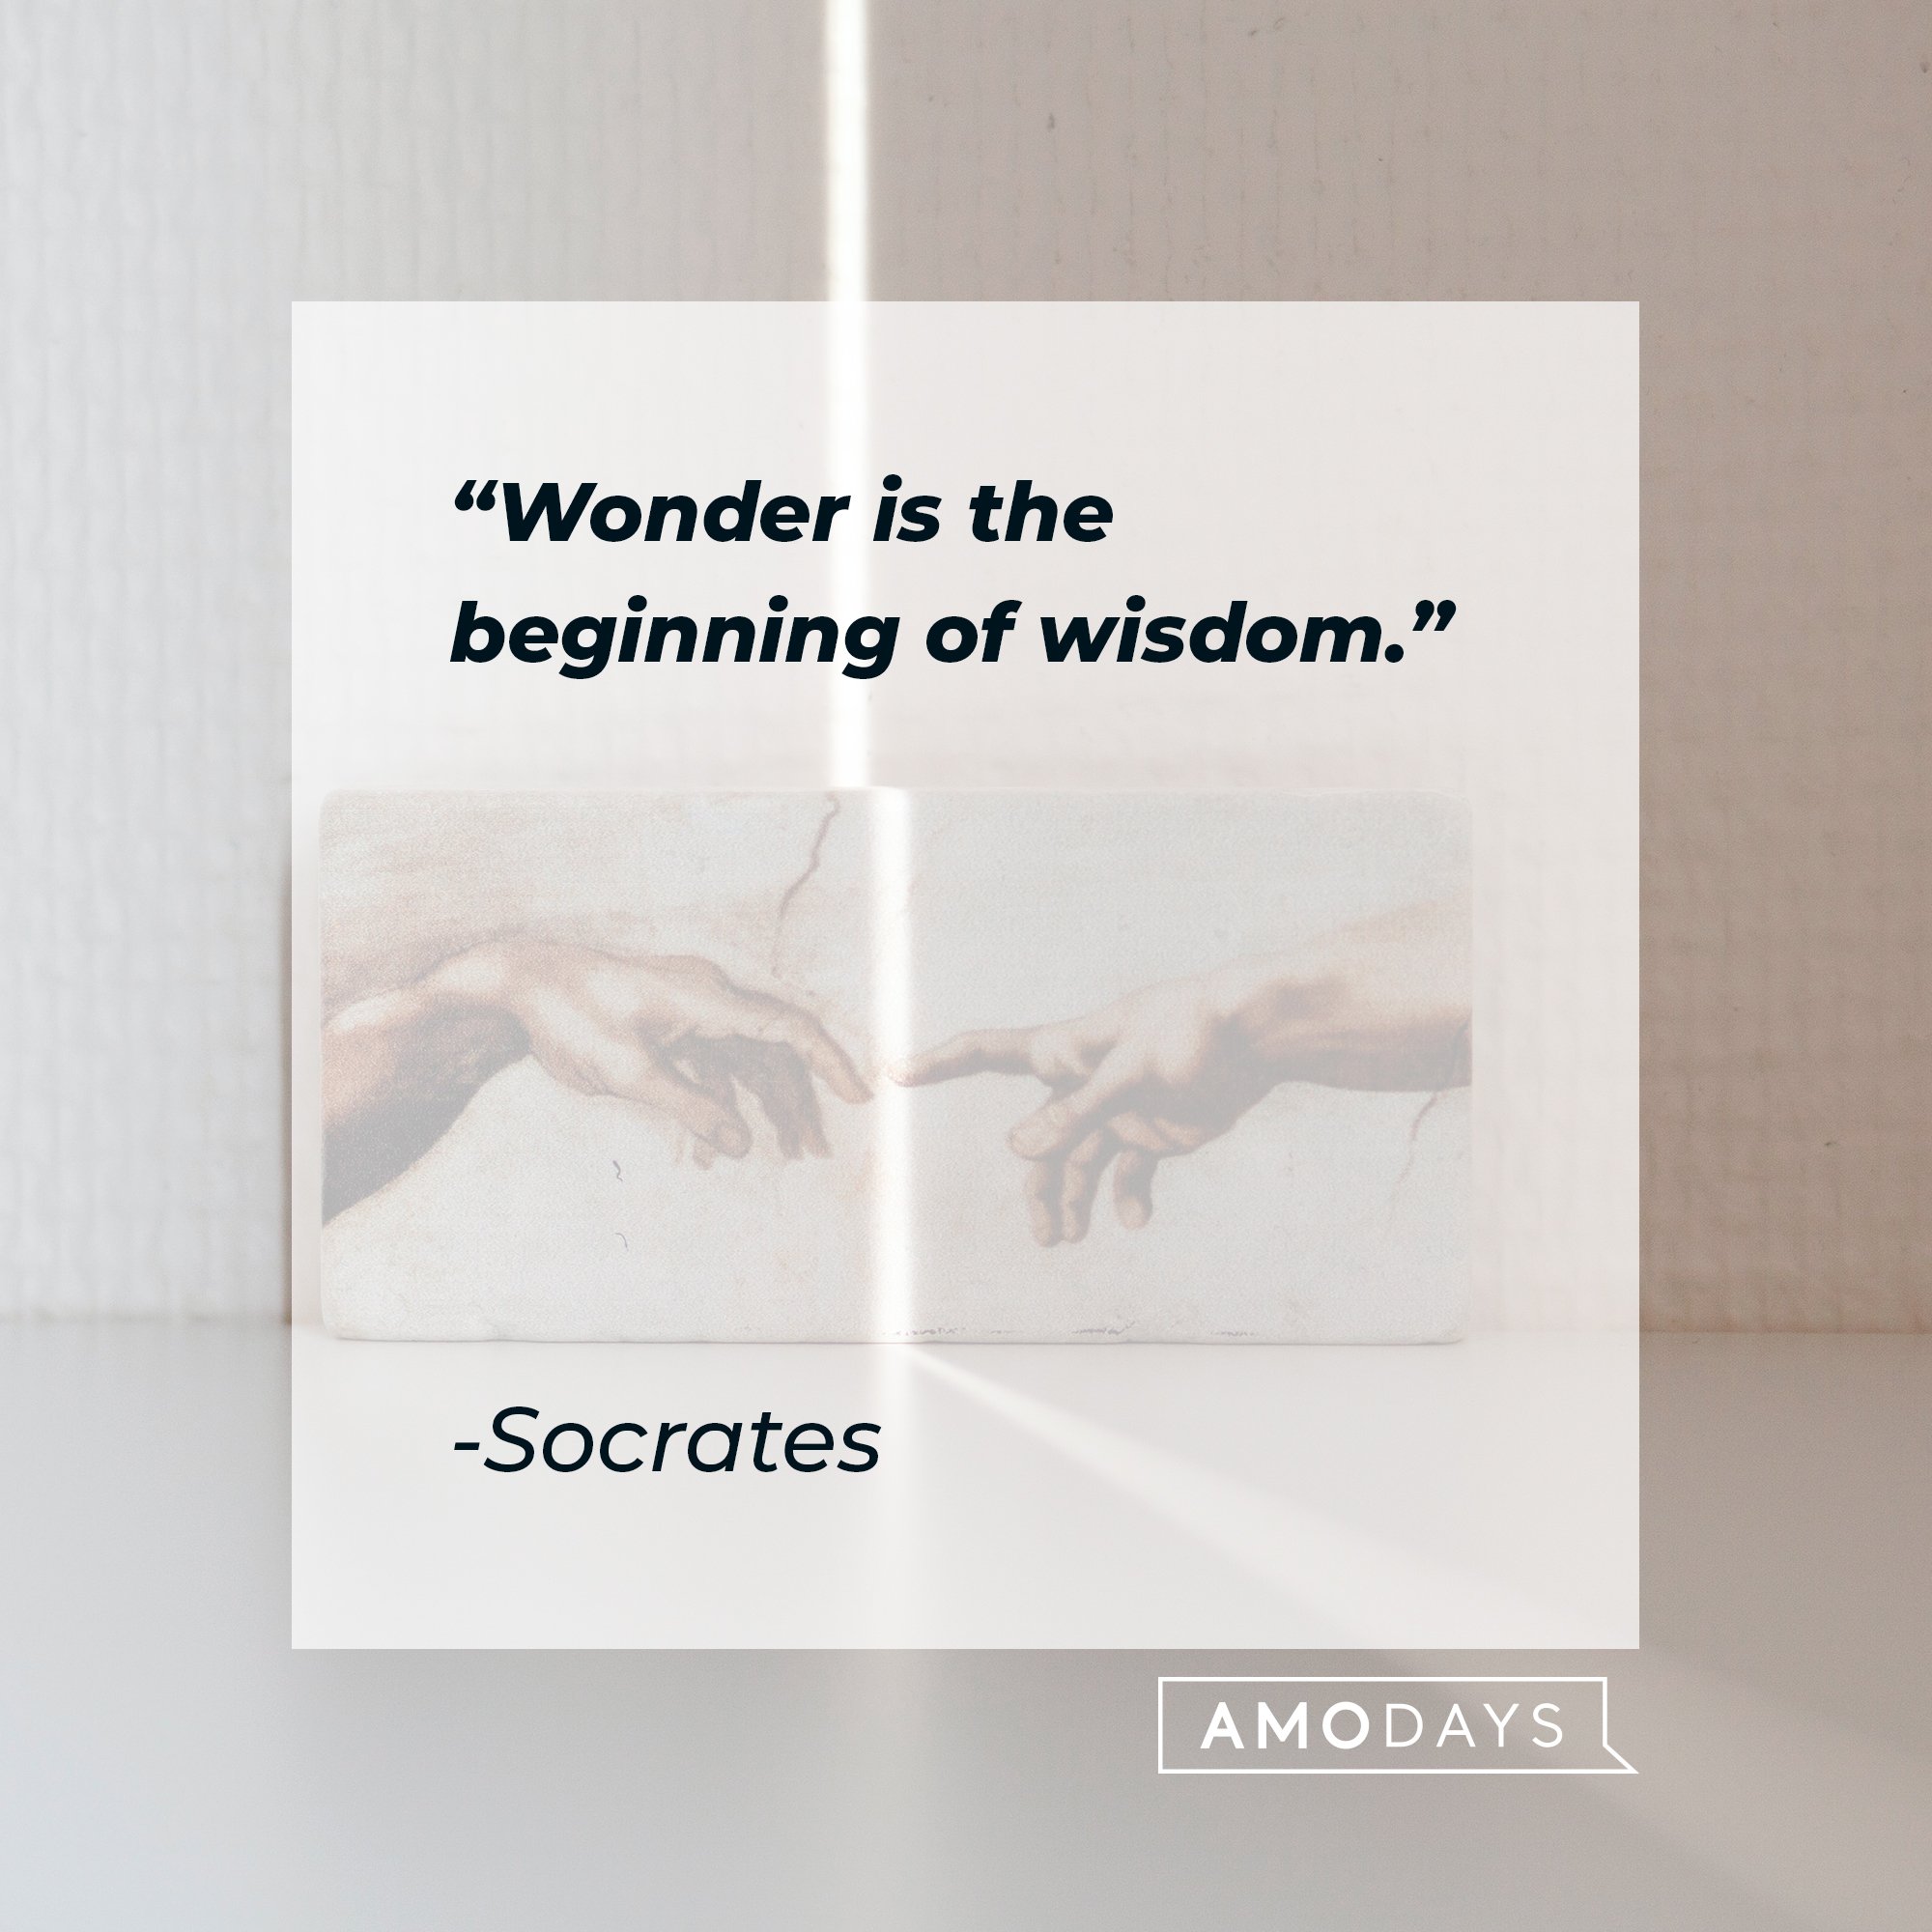 Socrates’ quote: "Wonder is the beginning of wisdom." |  Image: AmoDays